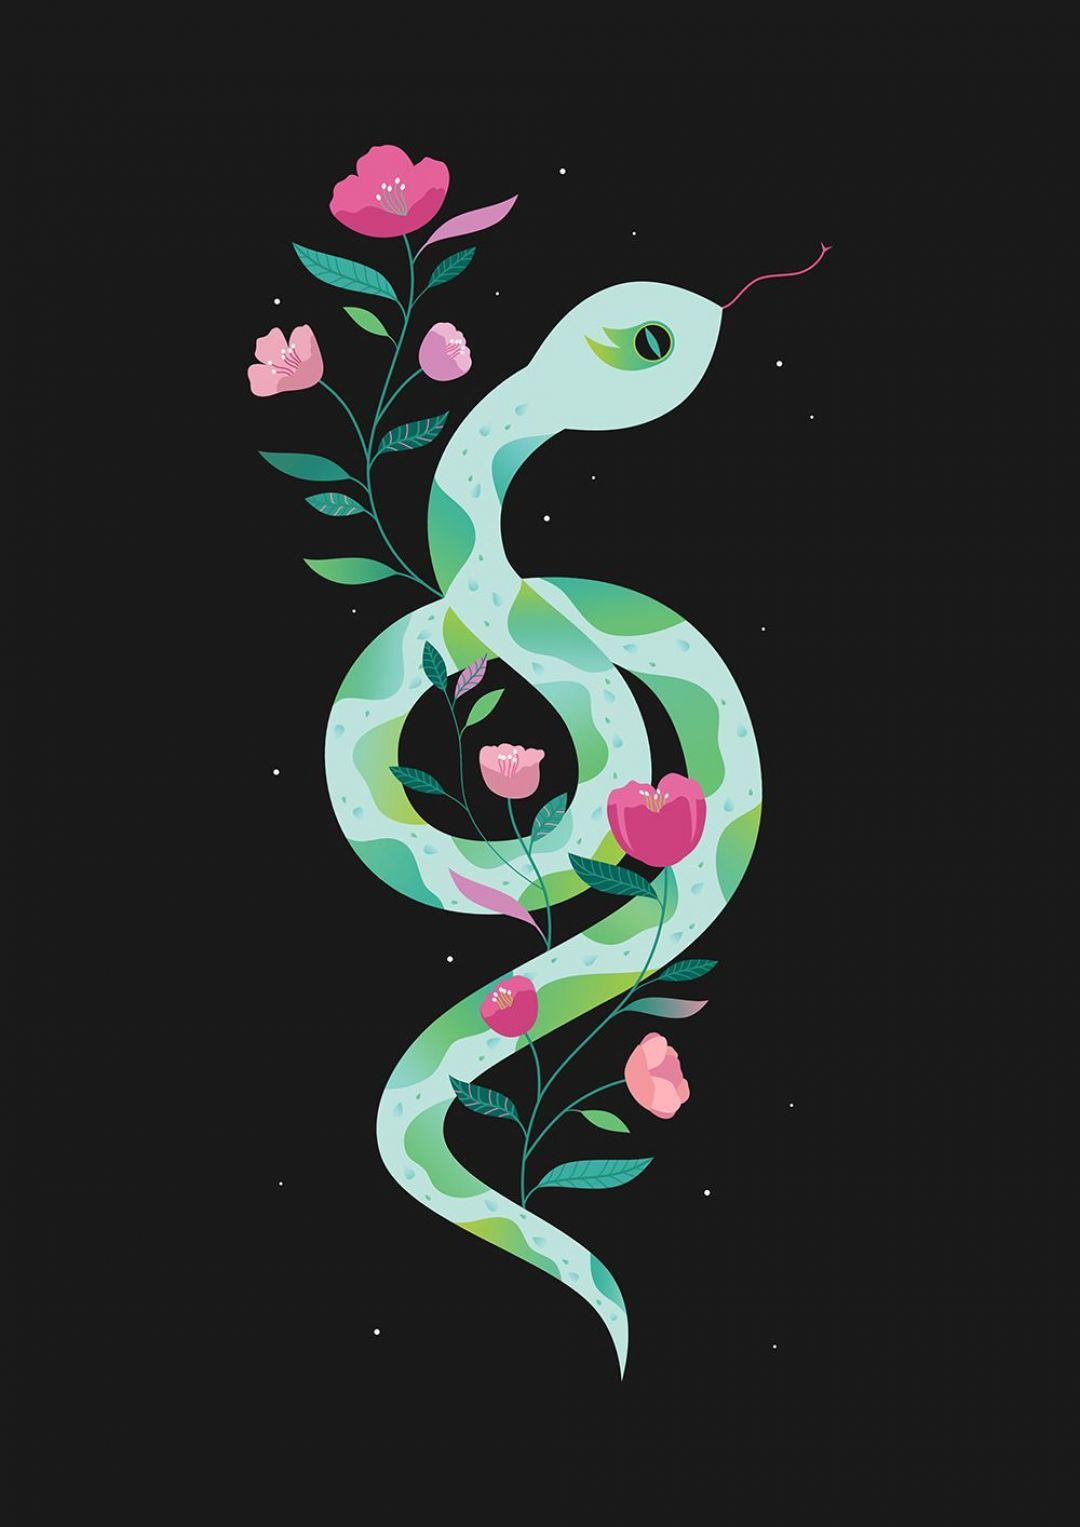 Змея и цветок 2. Змея арт. Змея с цветочком. Змея арты. Красивая змея арт.